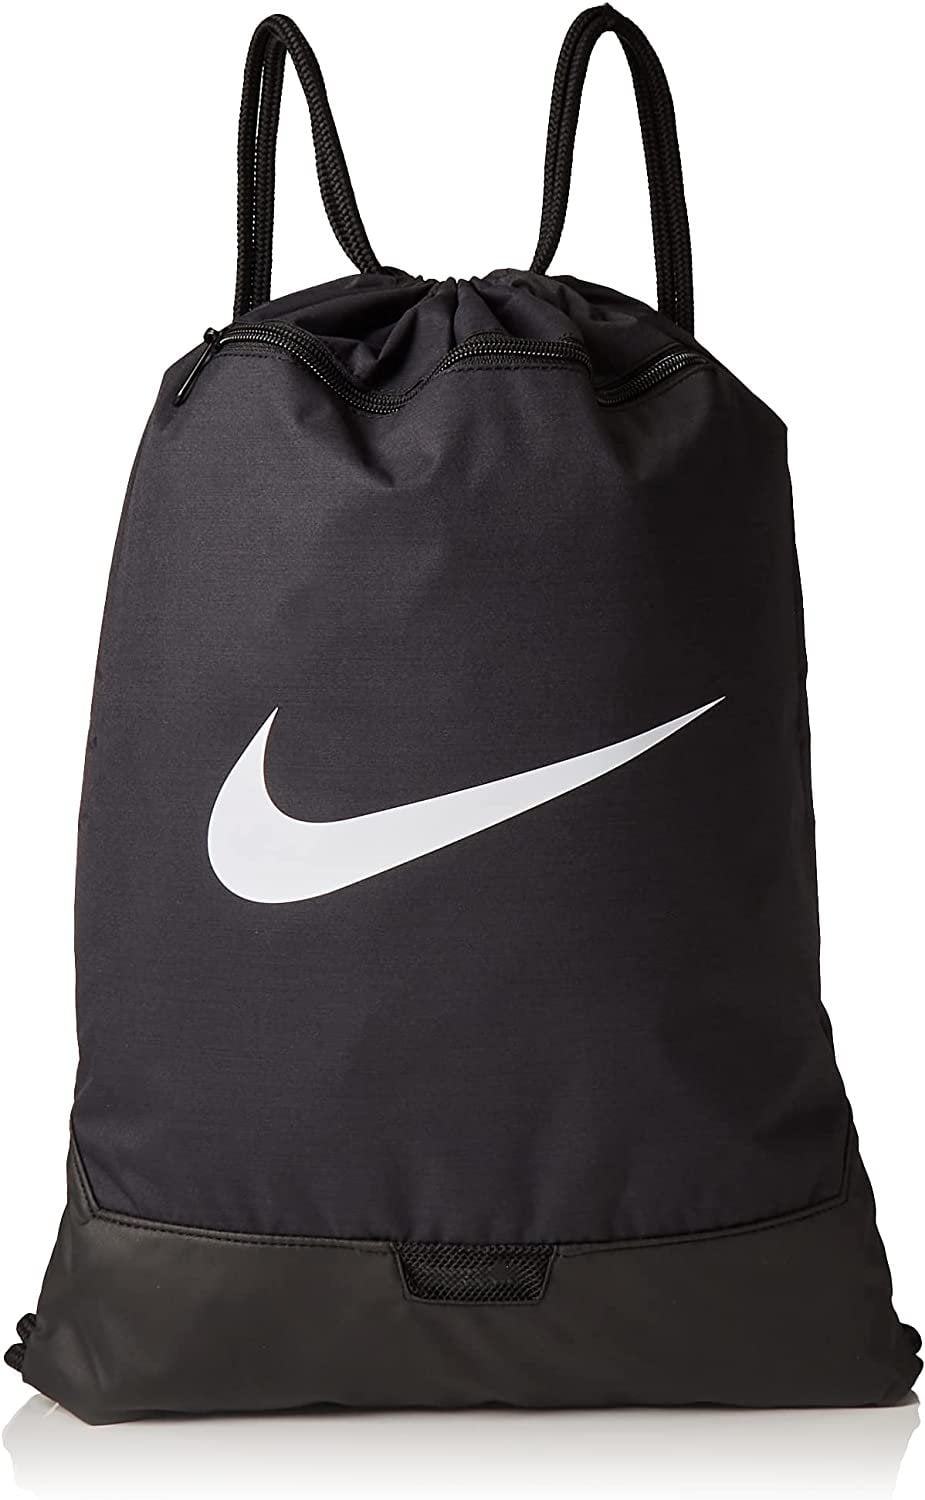 Nike Brasilia Training Gymsack, Drawstring Backpack with Zipper Pocket and Bottom, Black/Black/White - Walmart.com